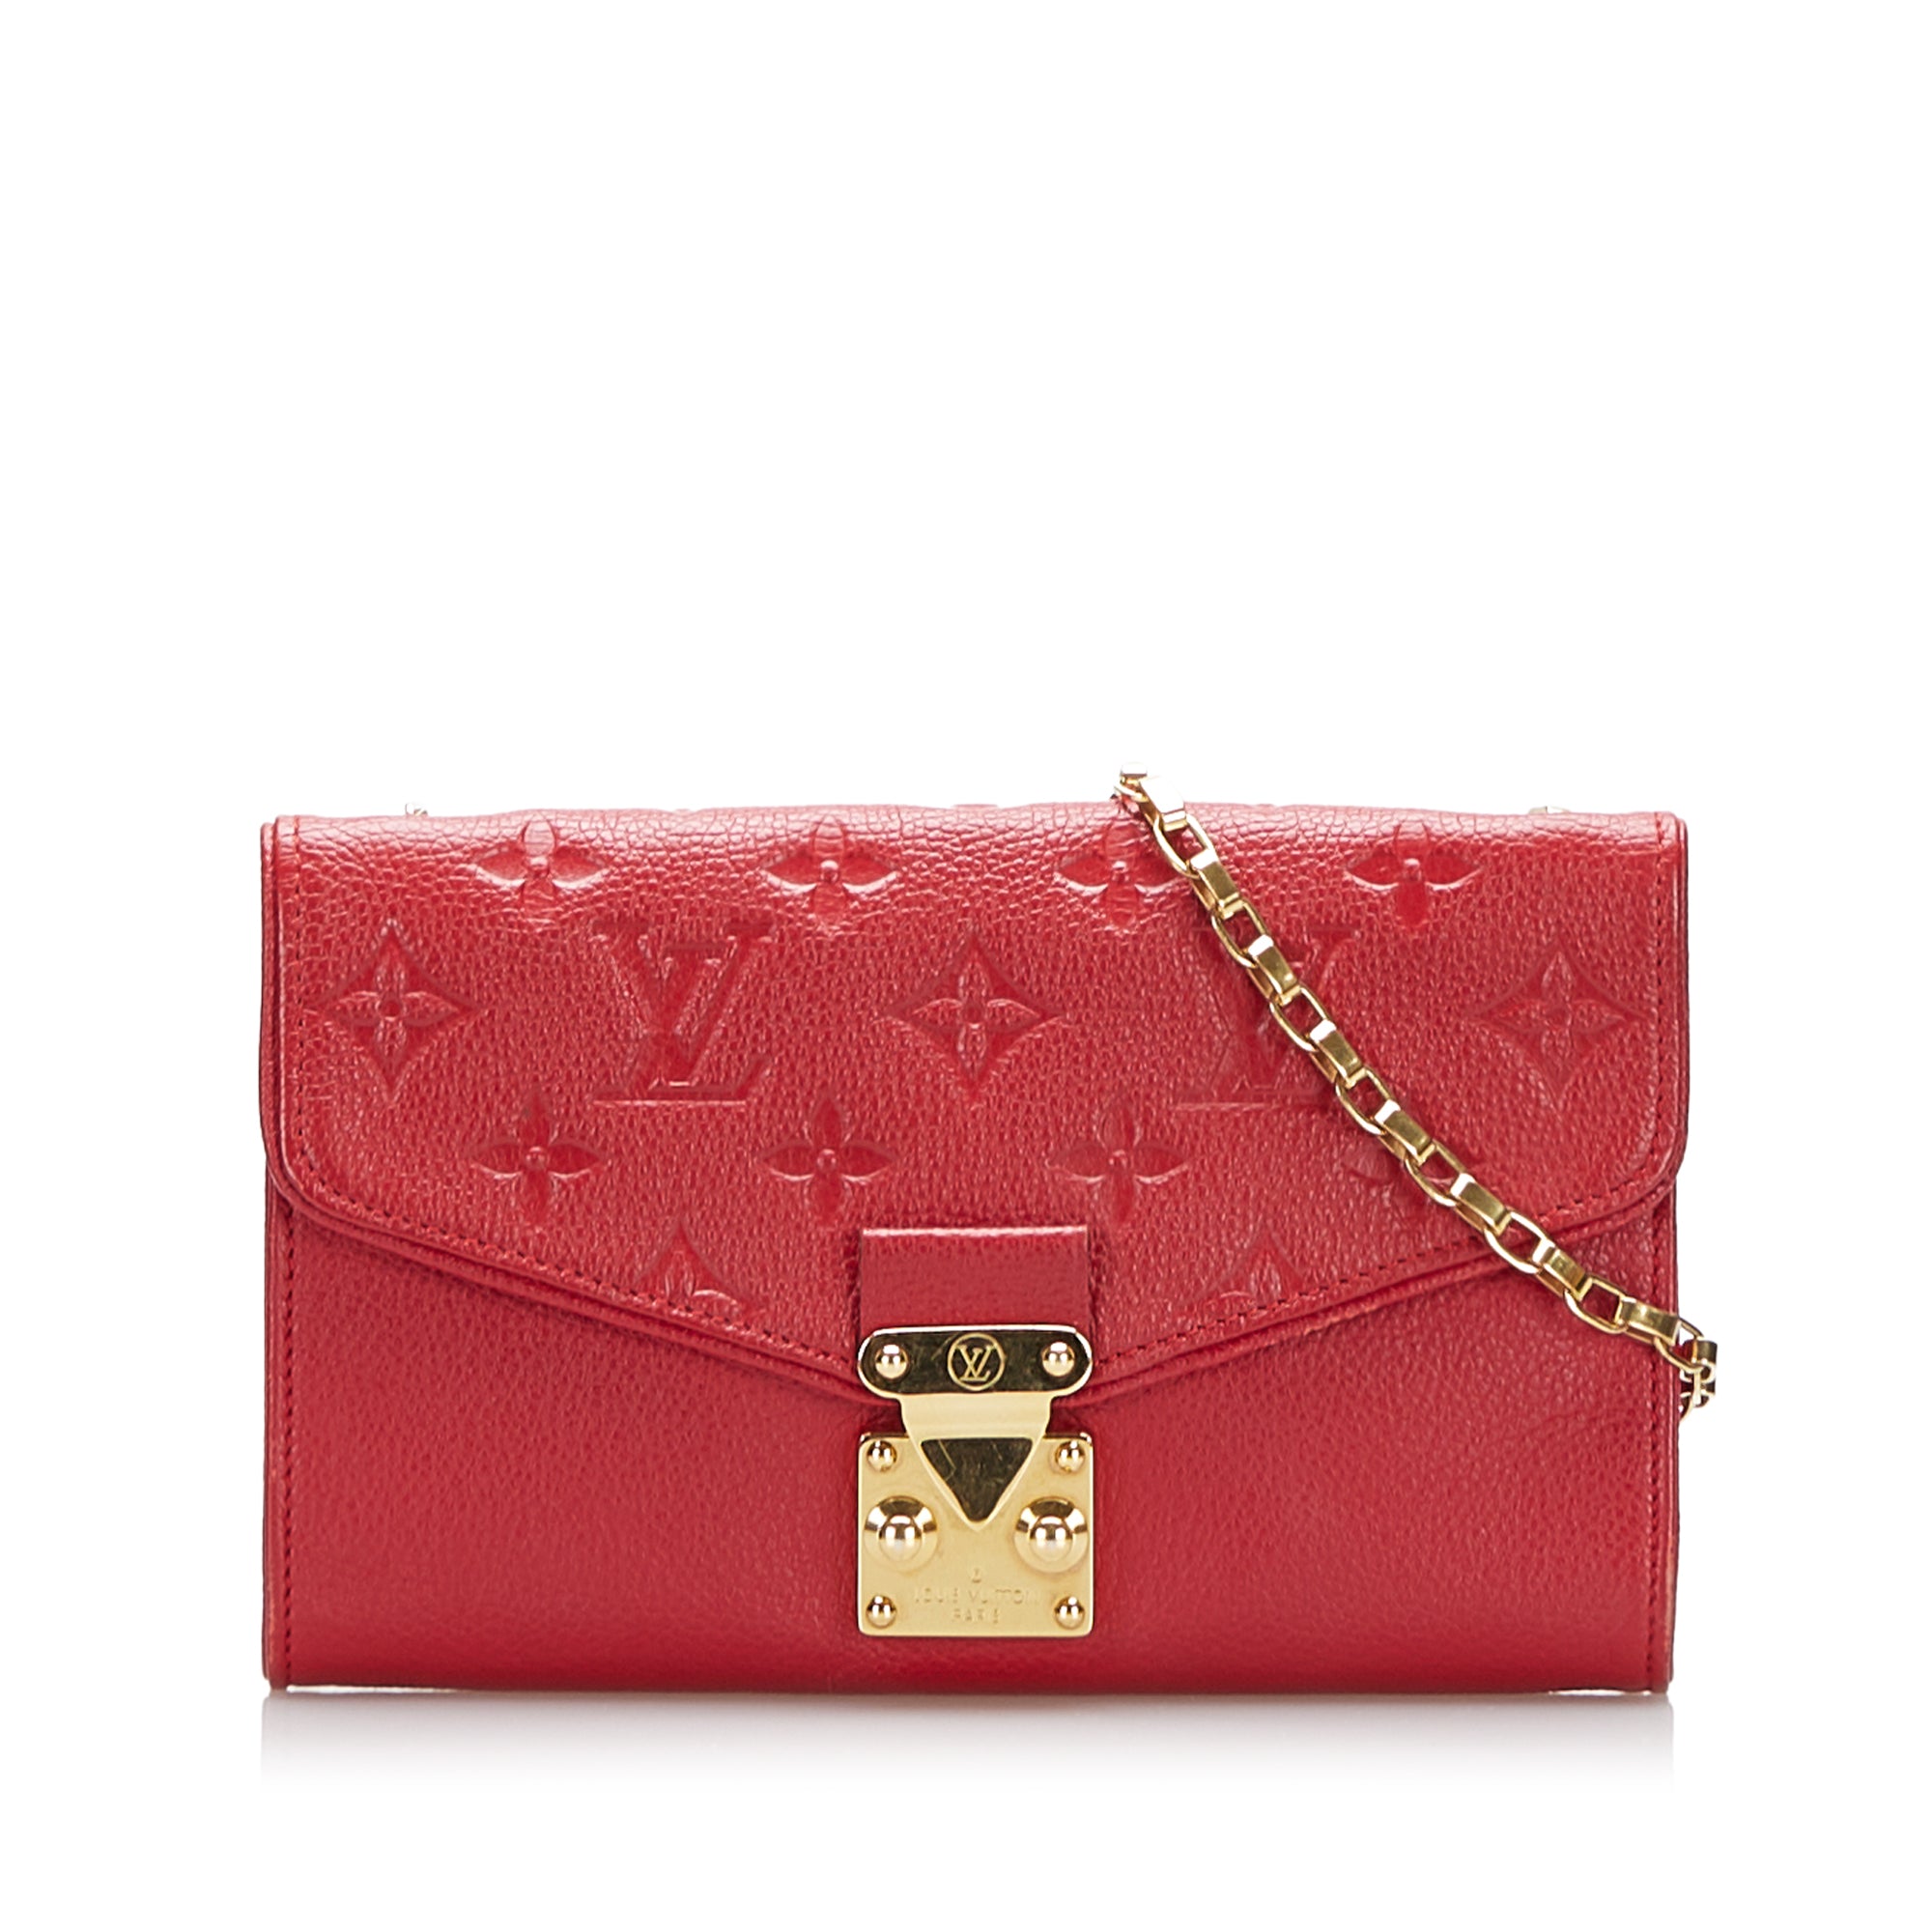 Saint-germain leather handbag Louis Vuitton Red in Leather - 32401237